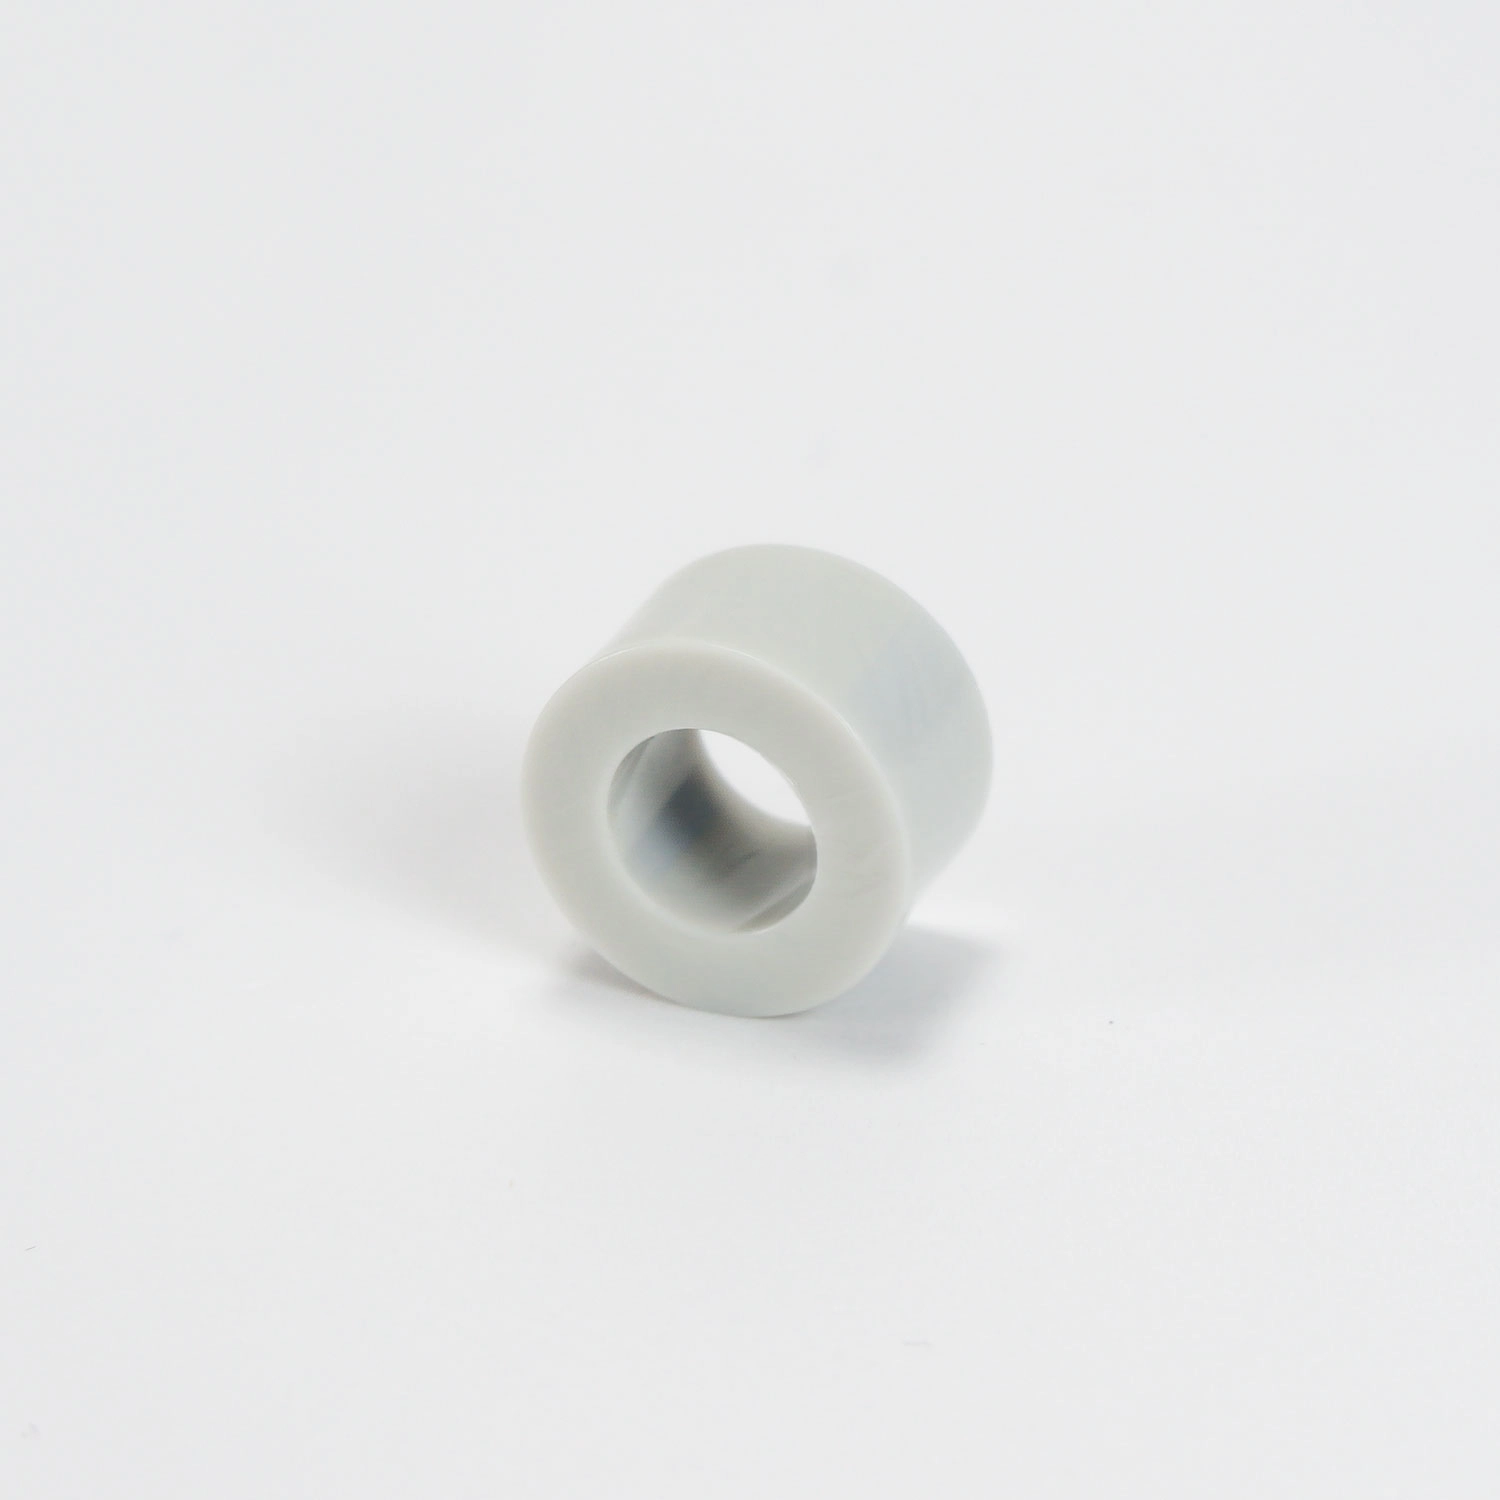 Distanzhülse Grau aus Kunststoff 7mm